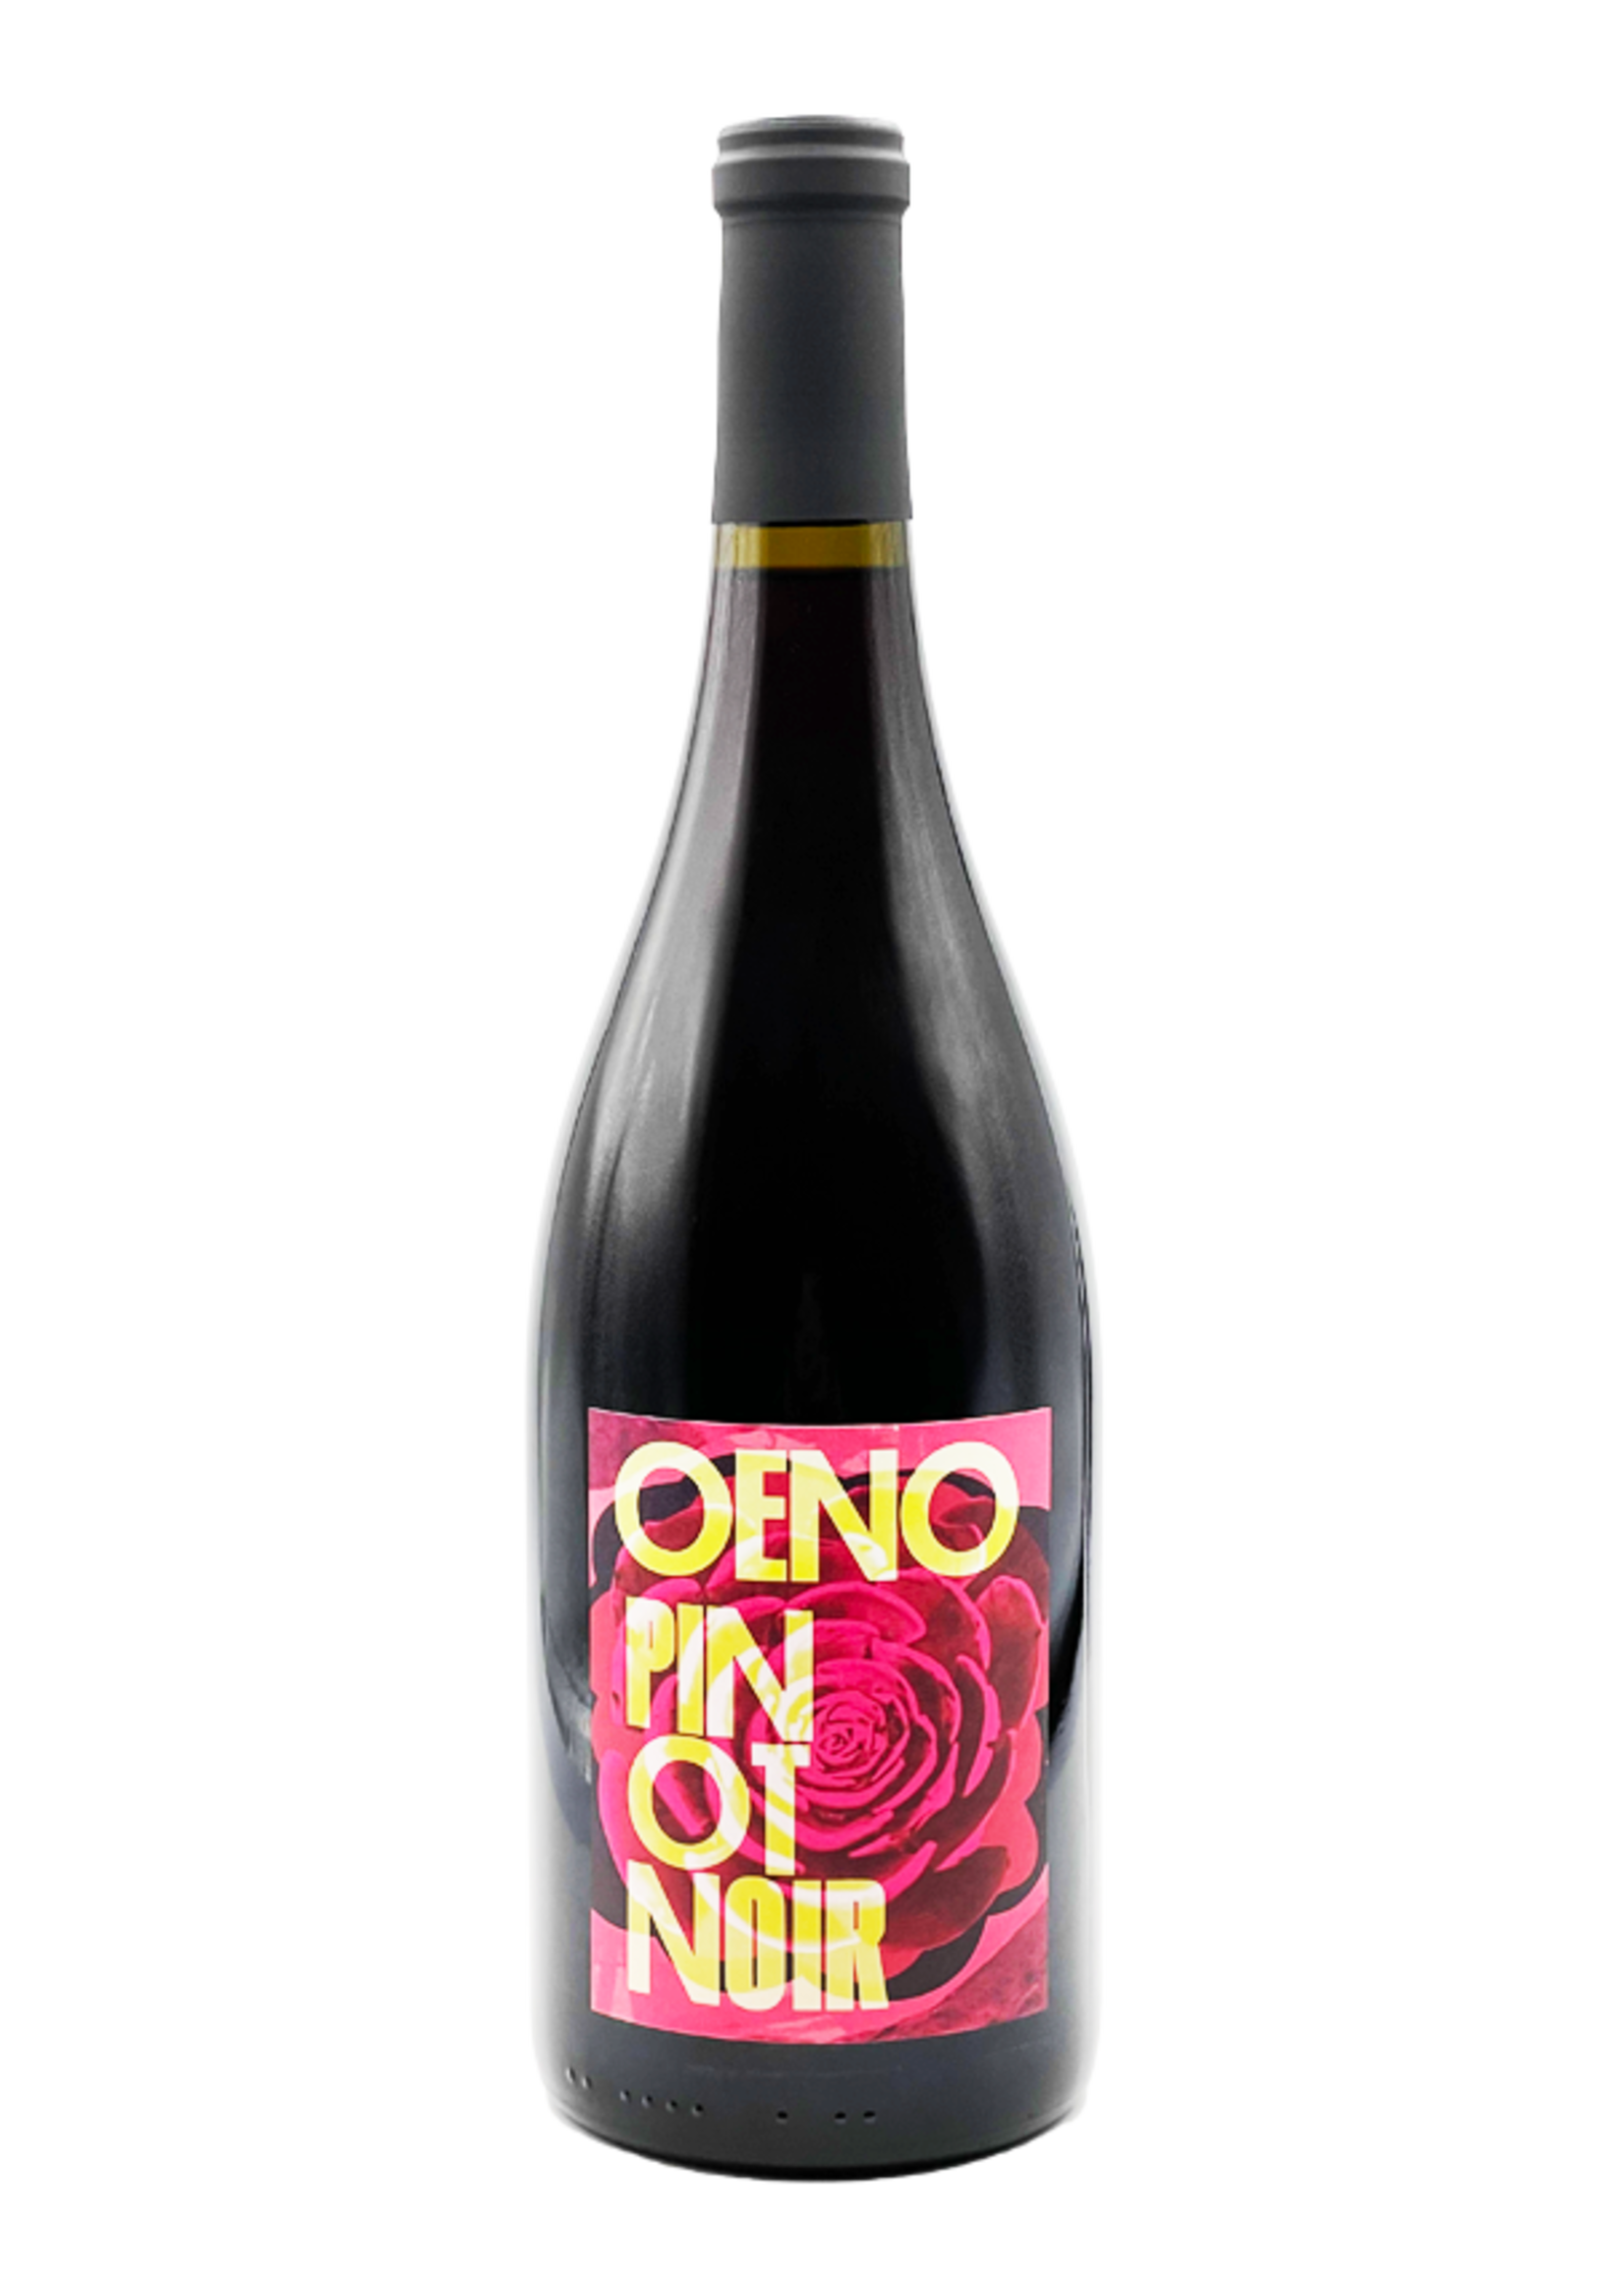 Oeno Russian River Valley Pinot Noir 2021 Oeno